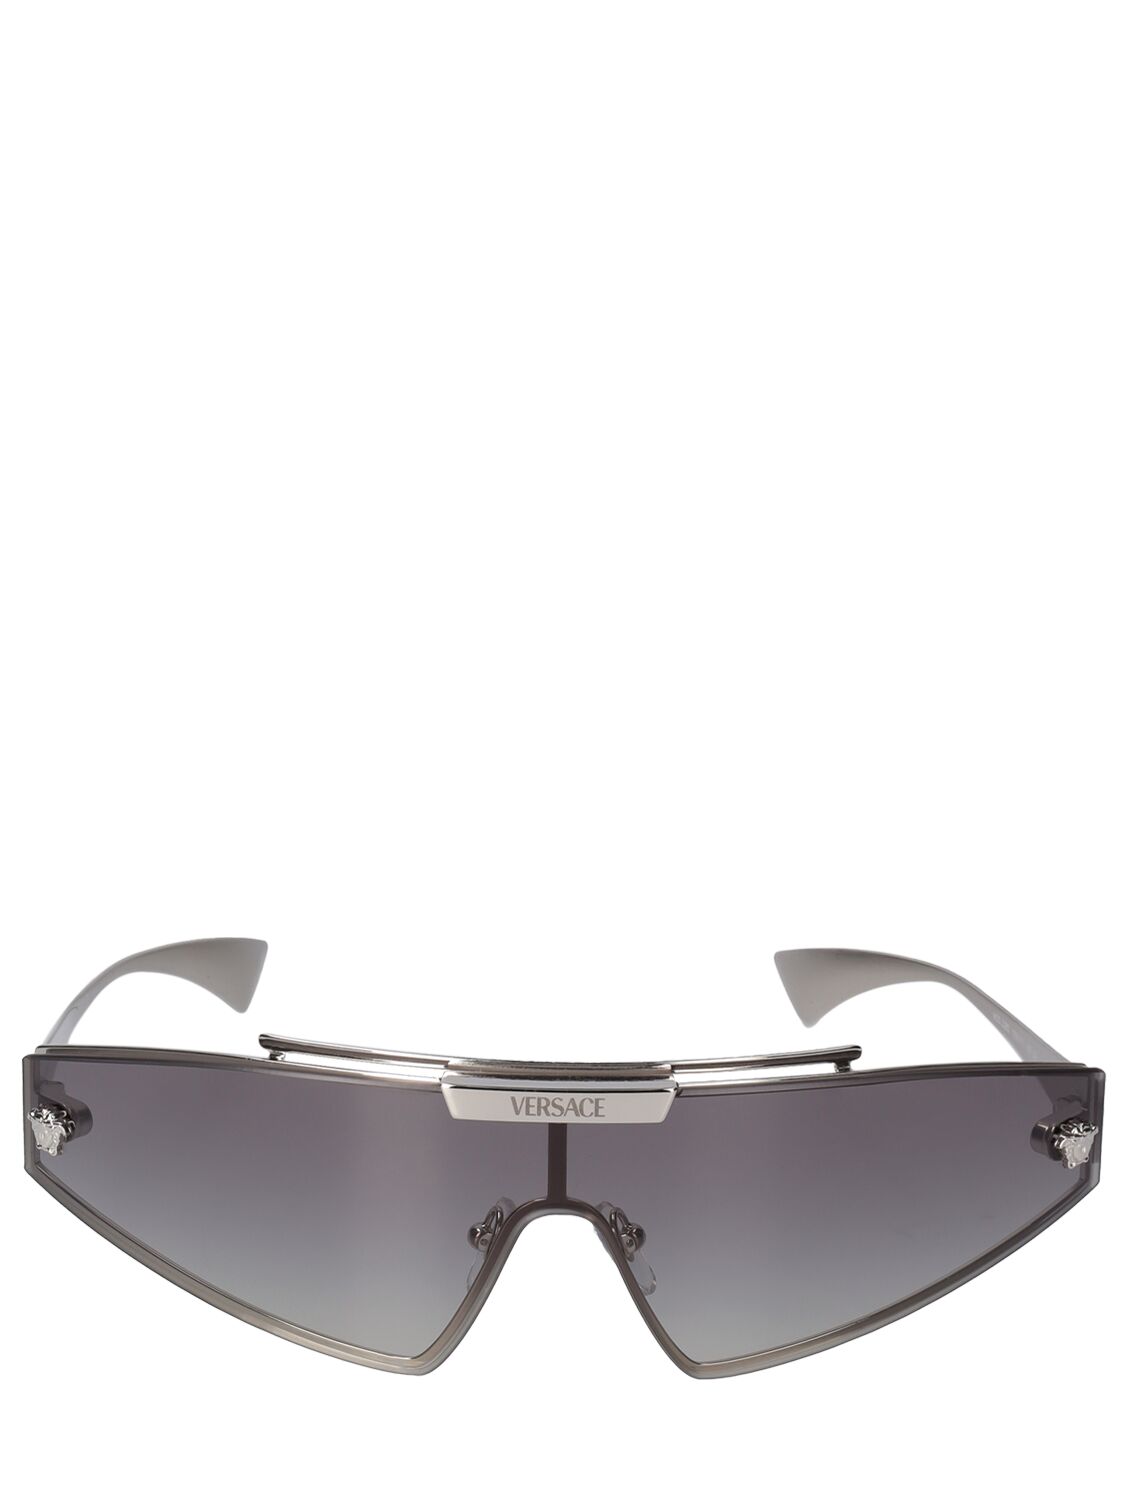 Versace Metal Sunglasses In Gray